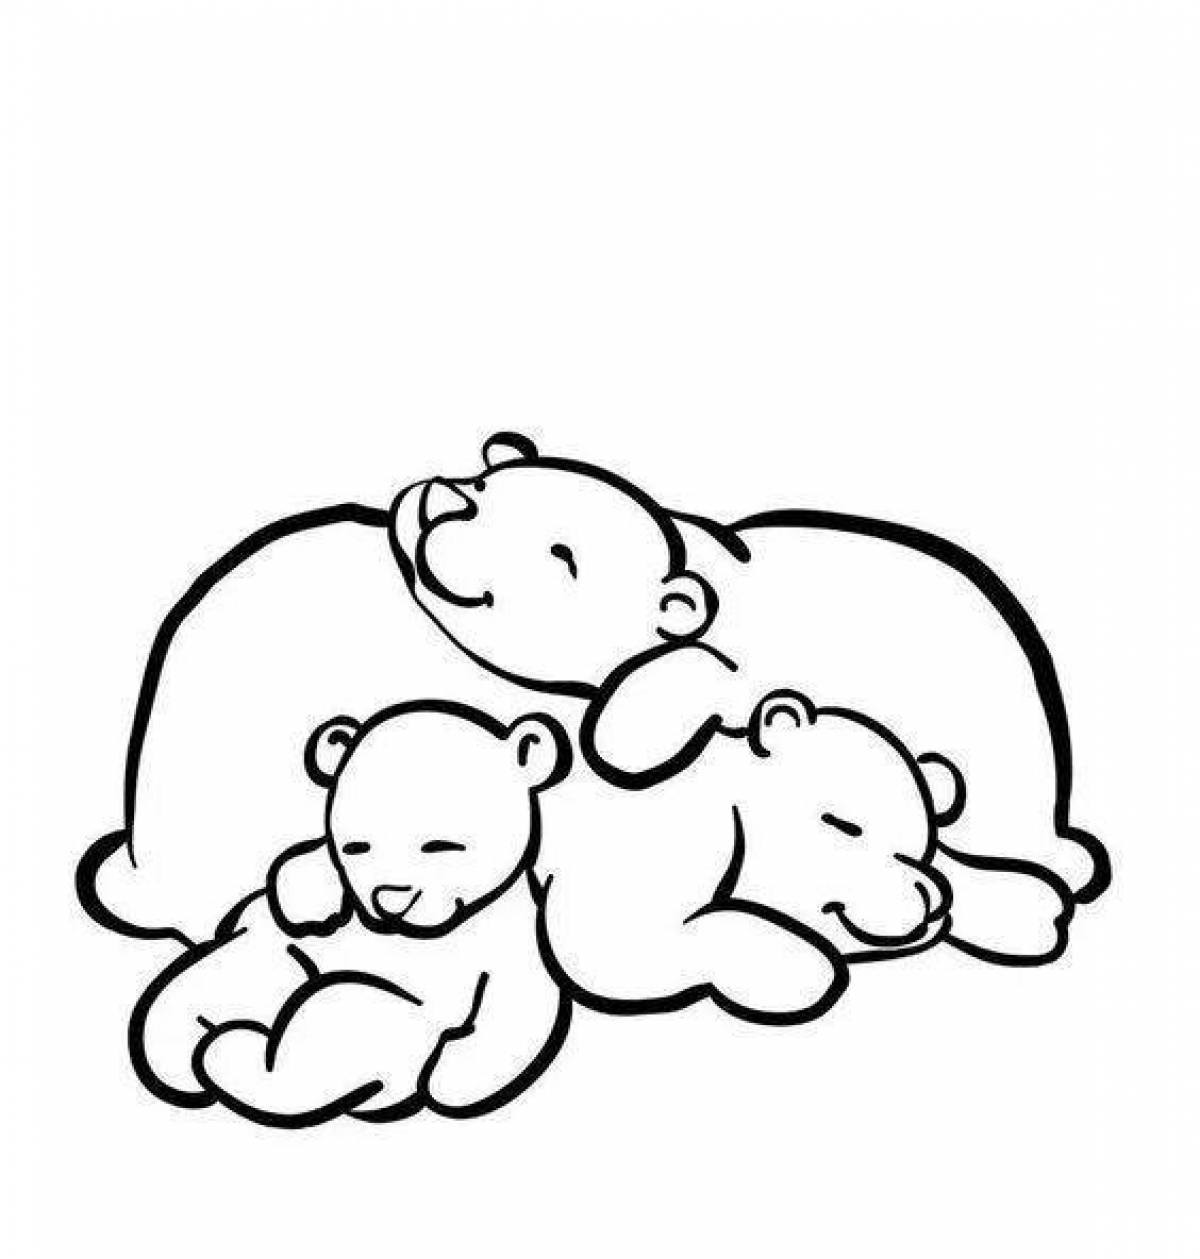 Comforting sleeping bear coloring book